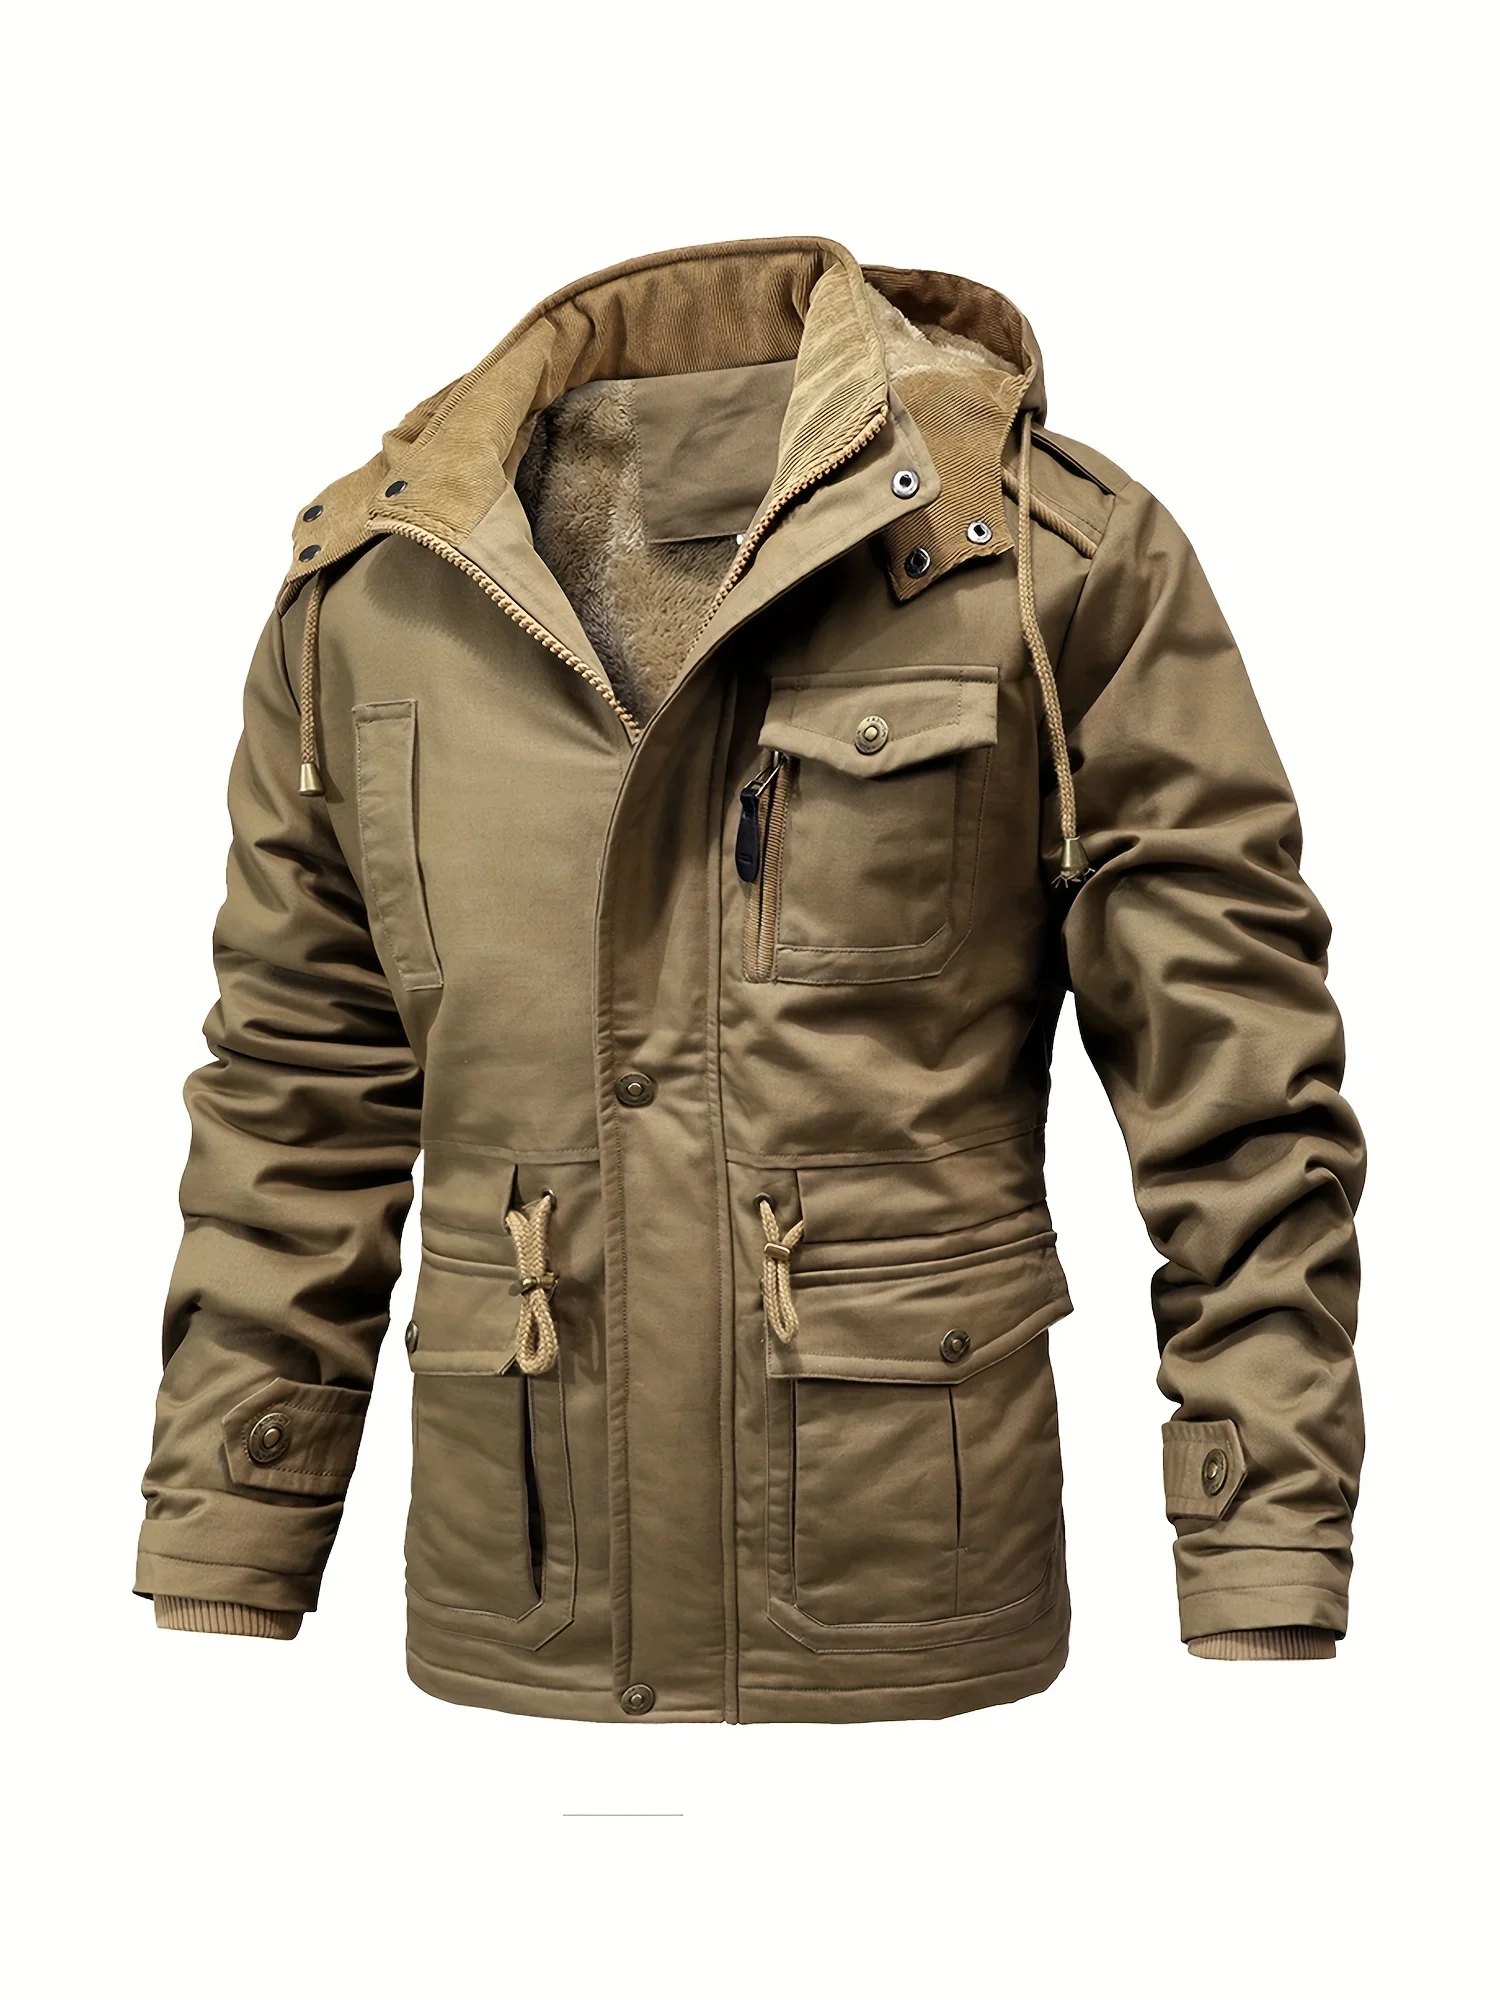 Men's Coat Cold Jackets Parkas Jakets Style Clothing Windbreaker Big Size Winter Male Sweat-shirt Autumn Waterproof Vintage Mens